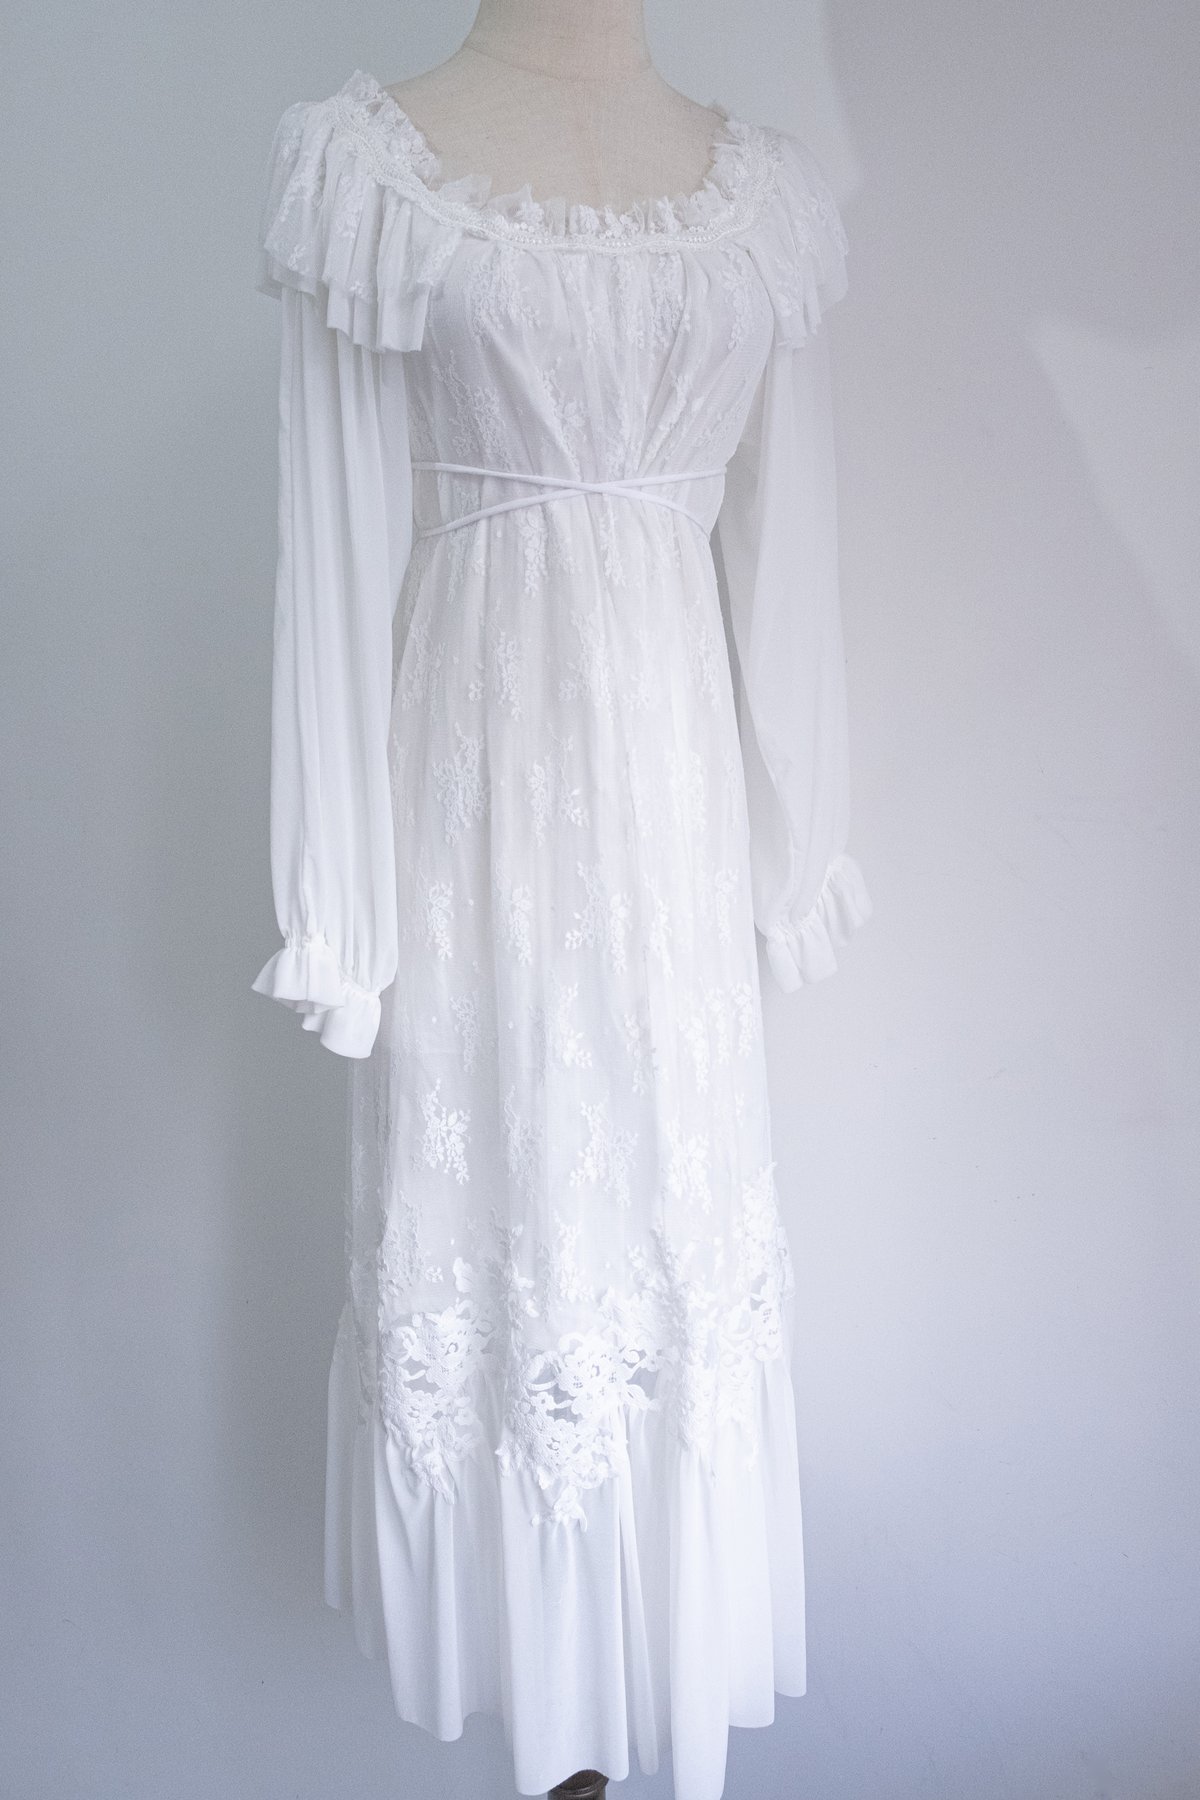 Image of SAMPLE SALE - Unreleased Dress 39